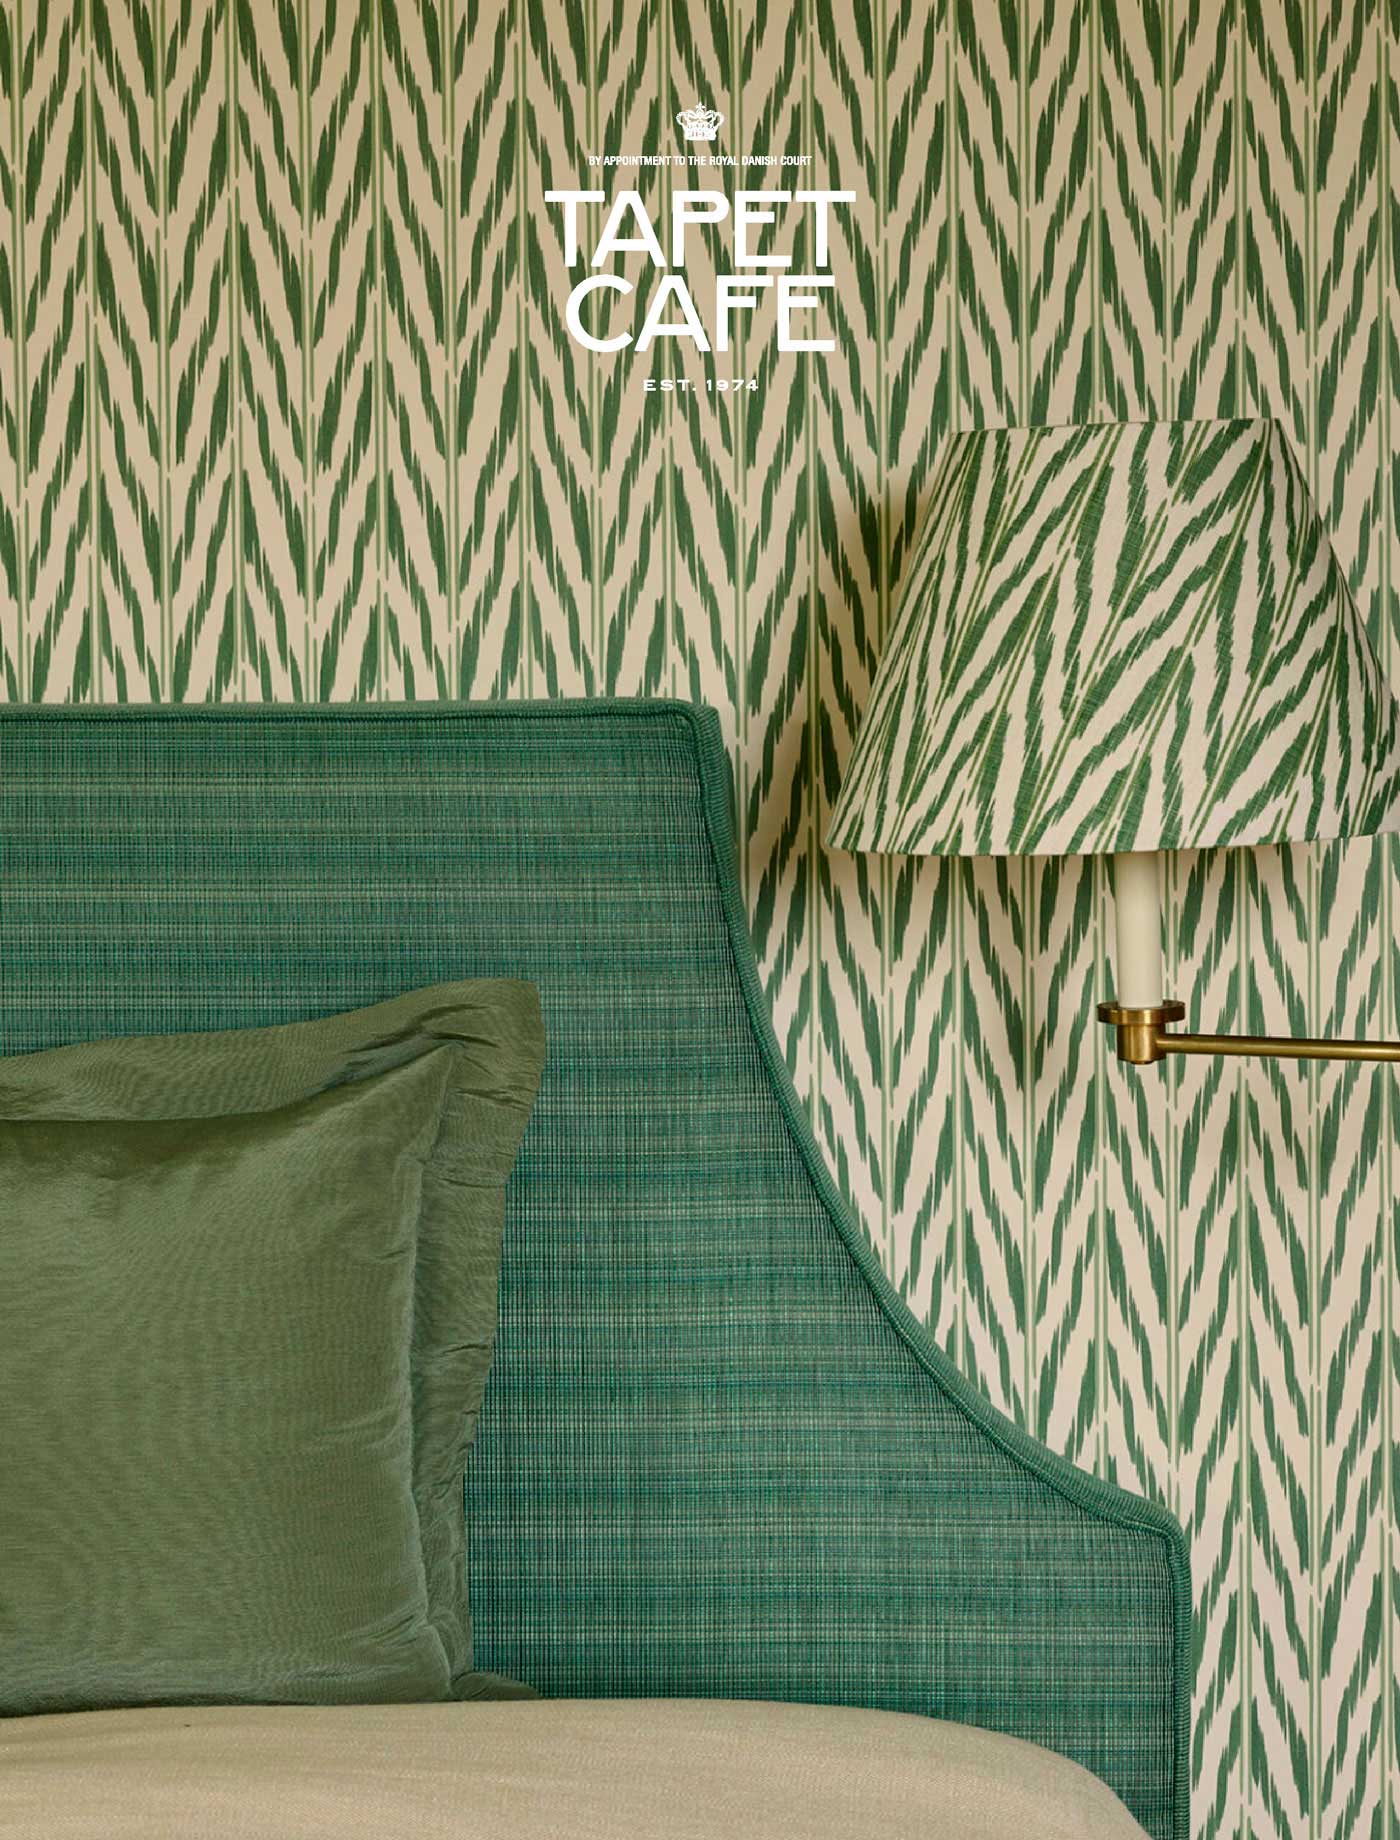 Tapet Cafe – Visual identity